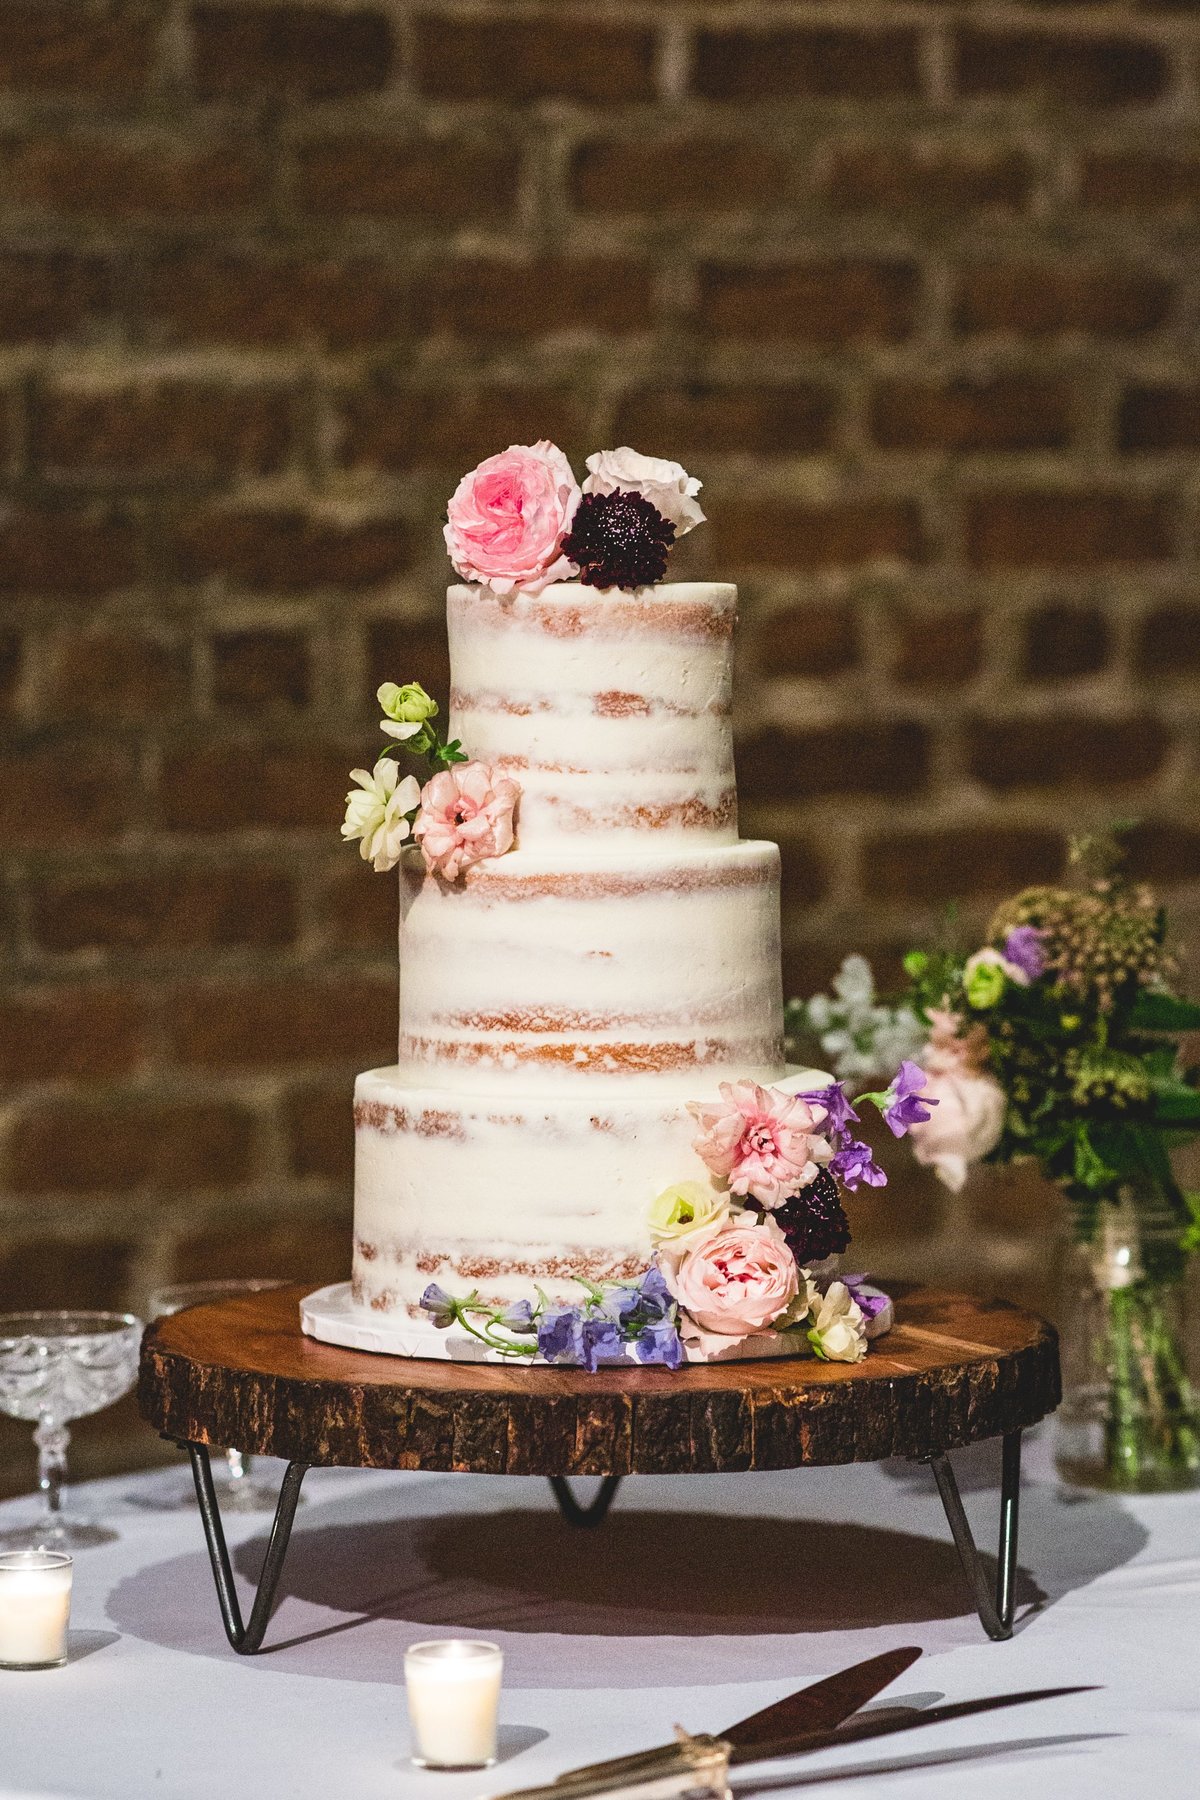 cake at wedding reception